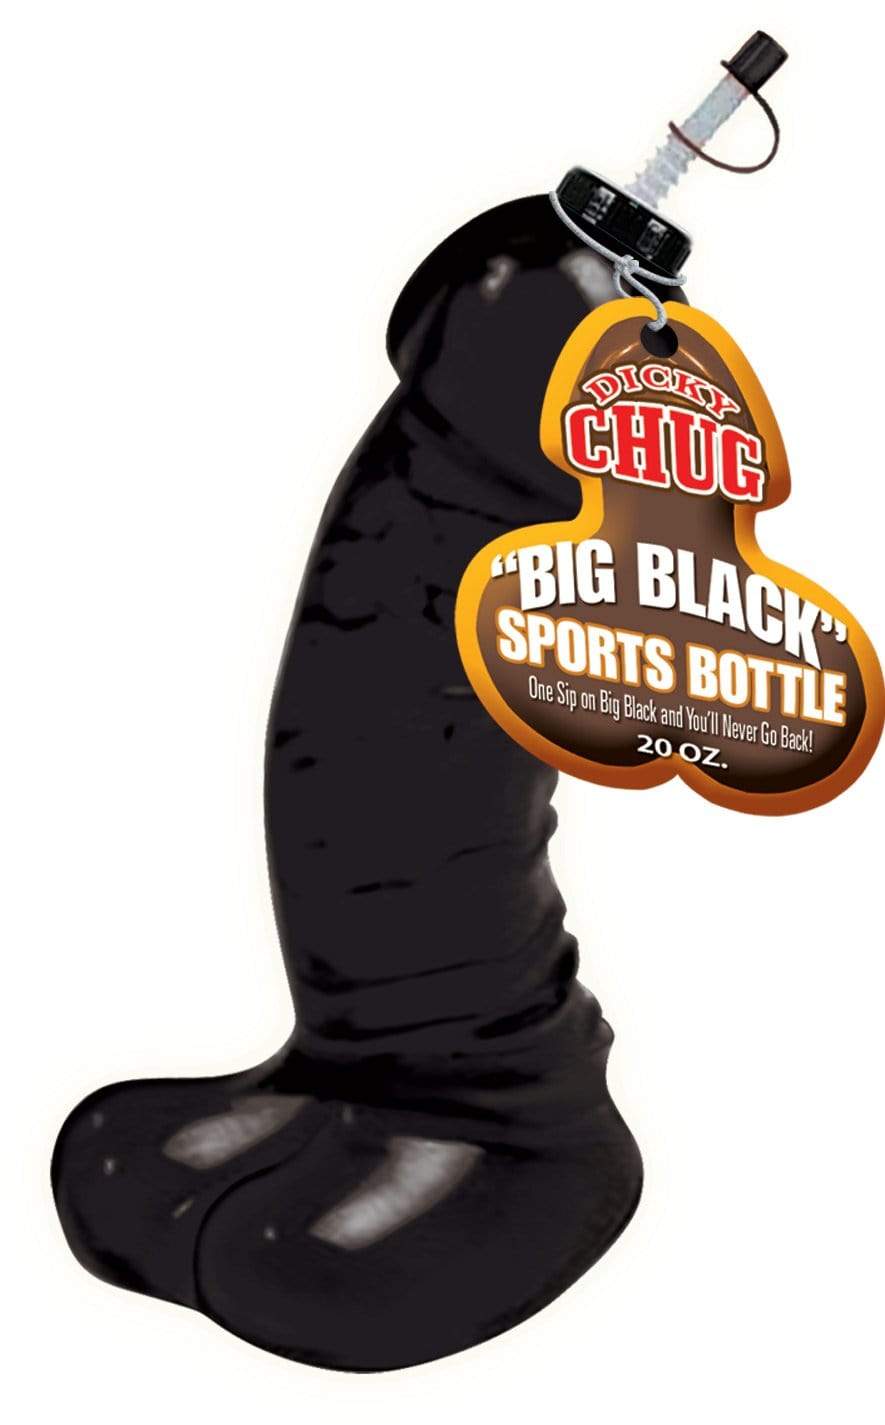 dicky chug sports bottle black